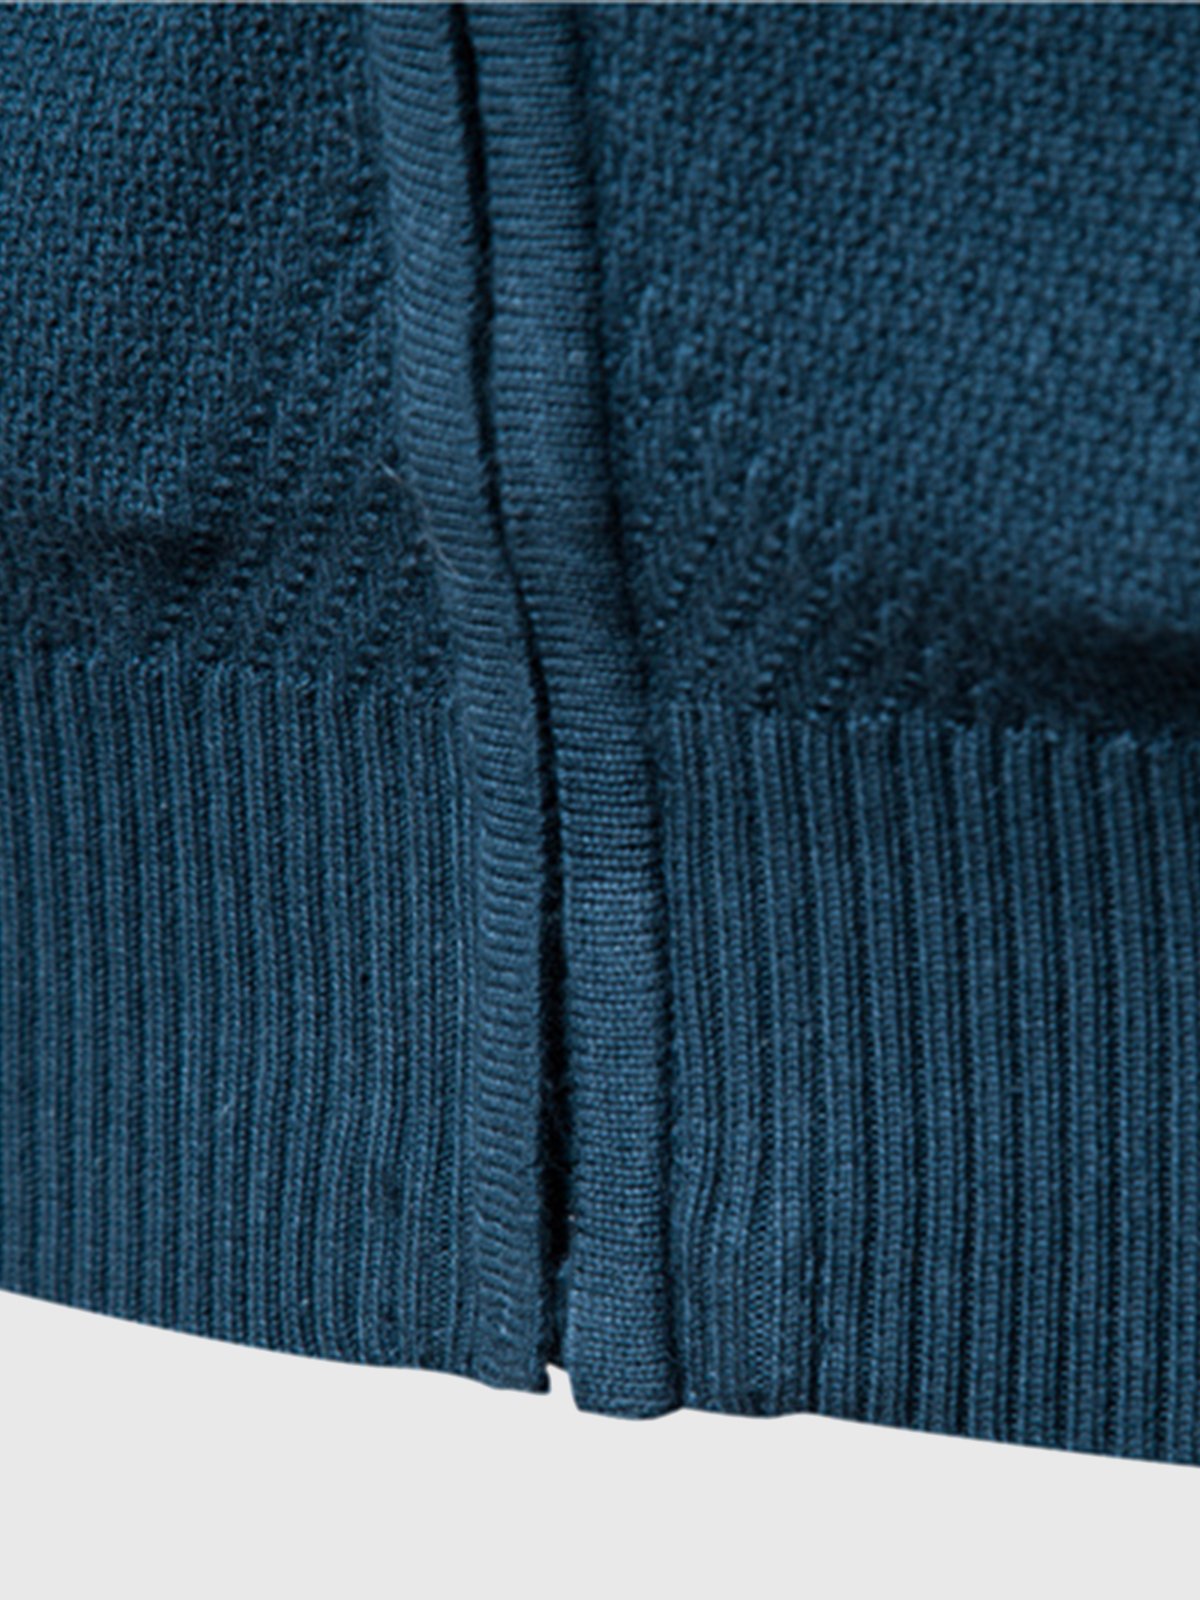 SeekMe Men's Full Zip Cardigan Sweaters Shawl Collar Jacquard